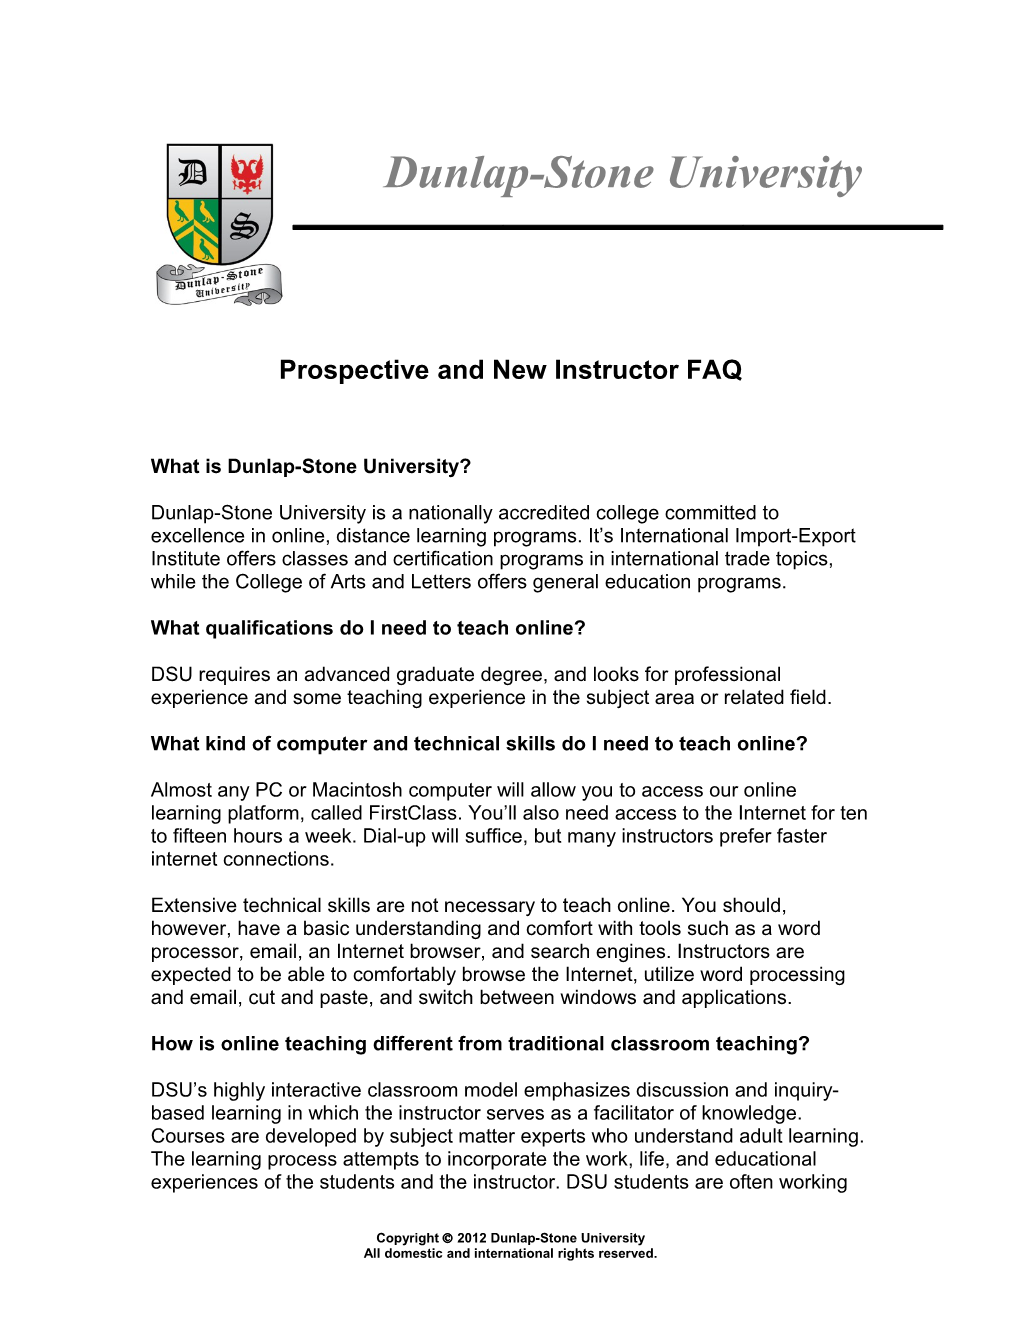 Dunlap-Stone University